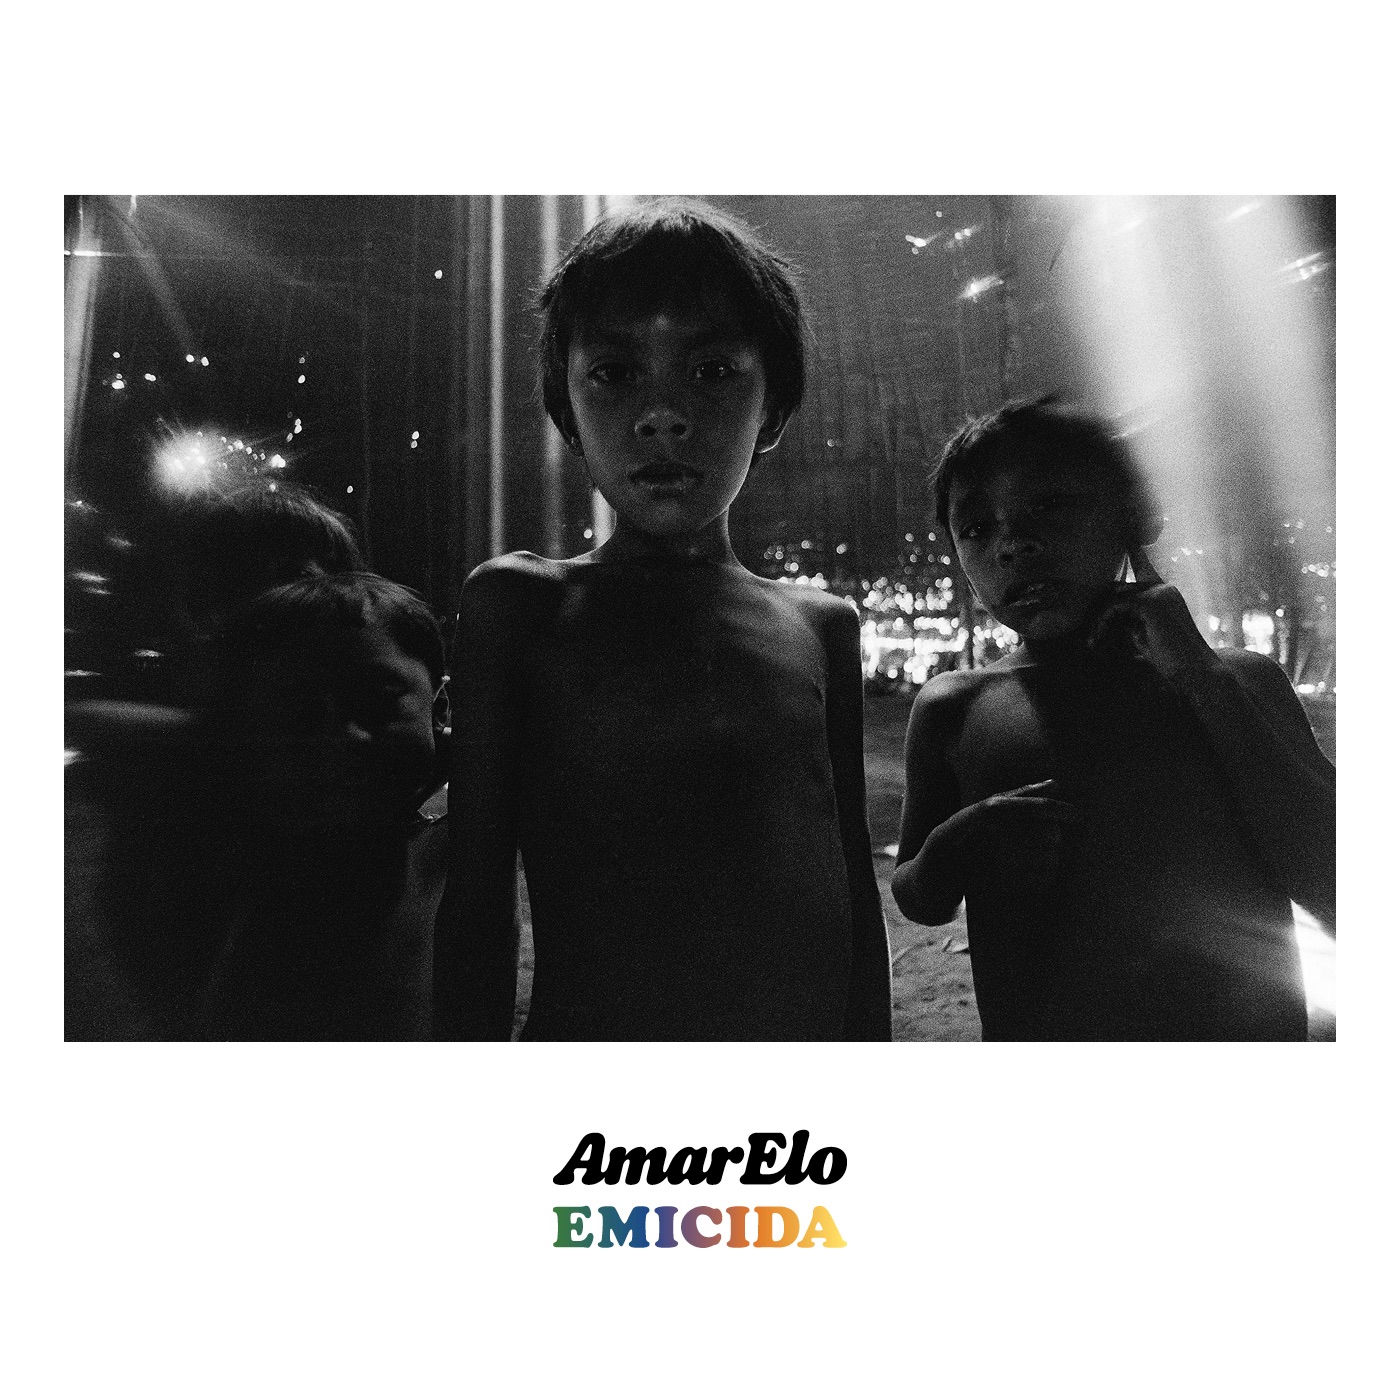 AmarElo by Emicida